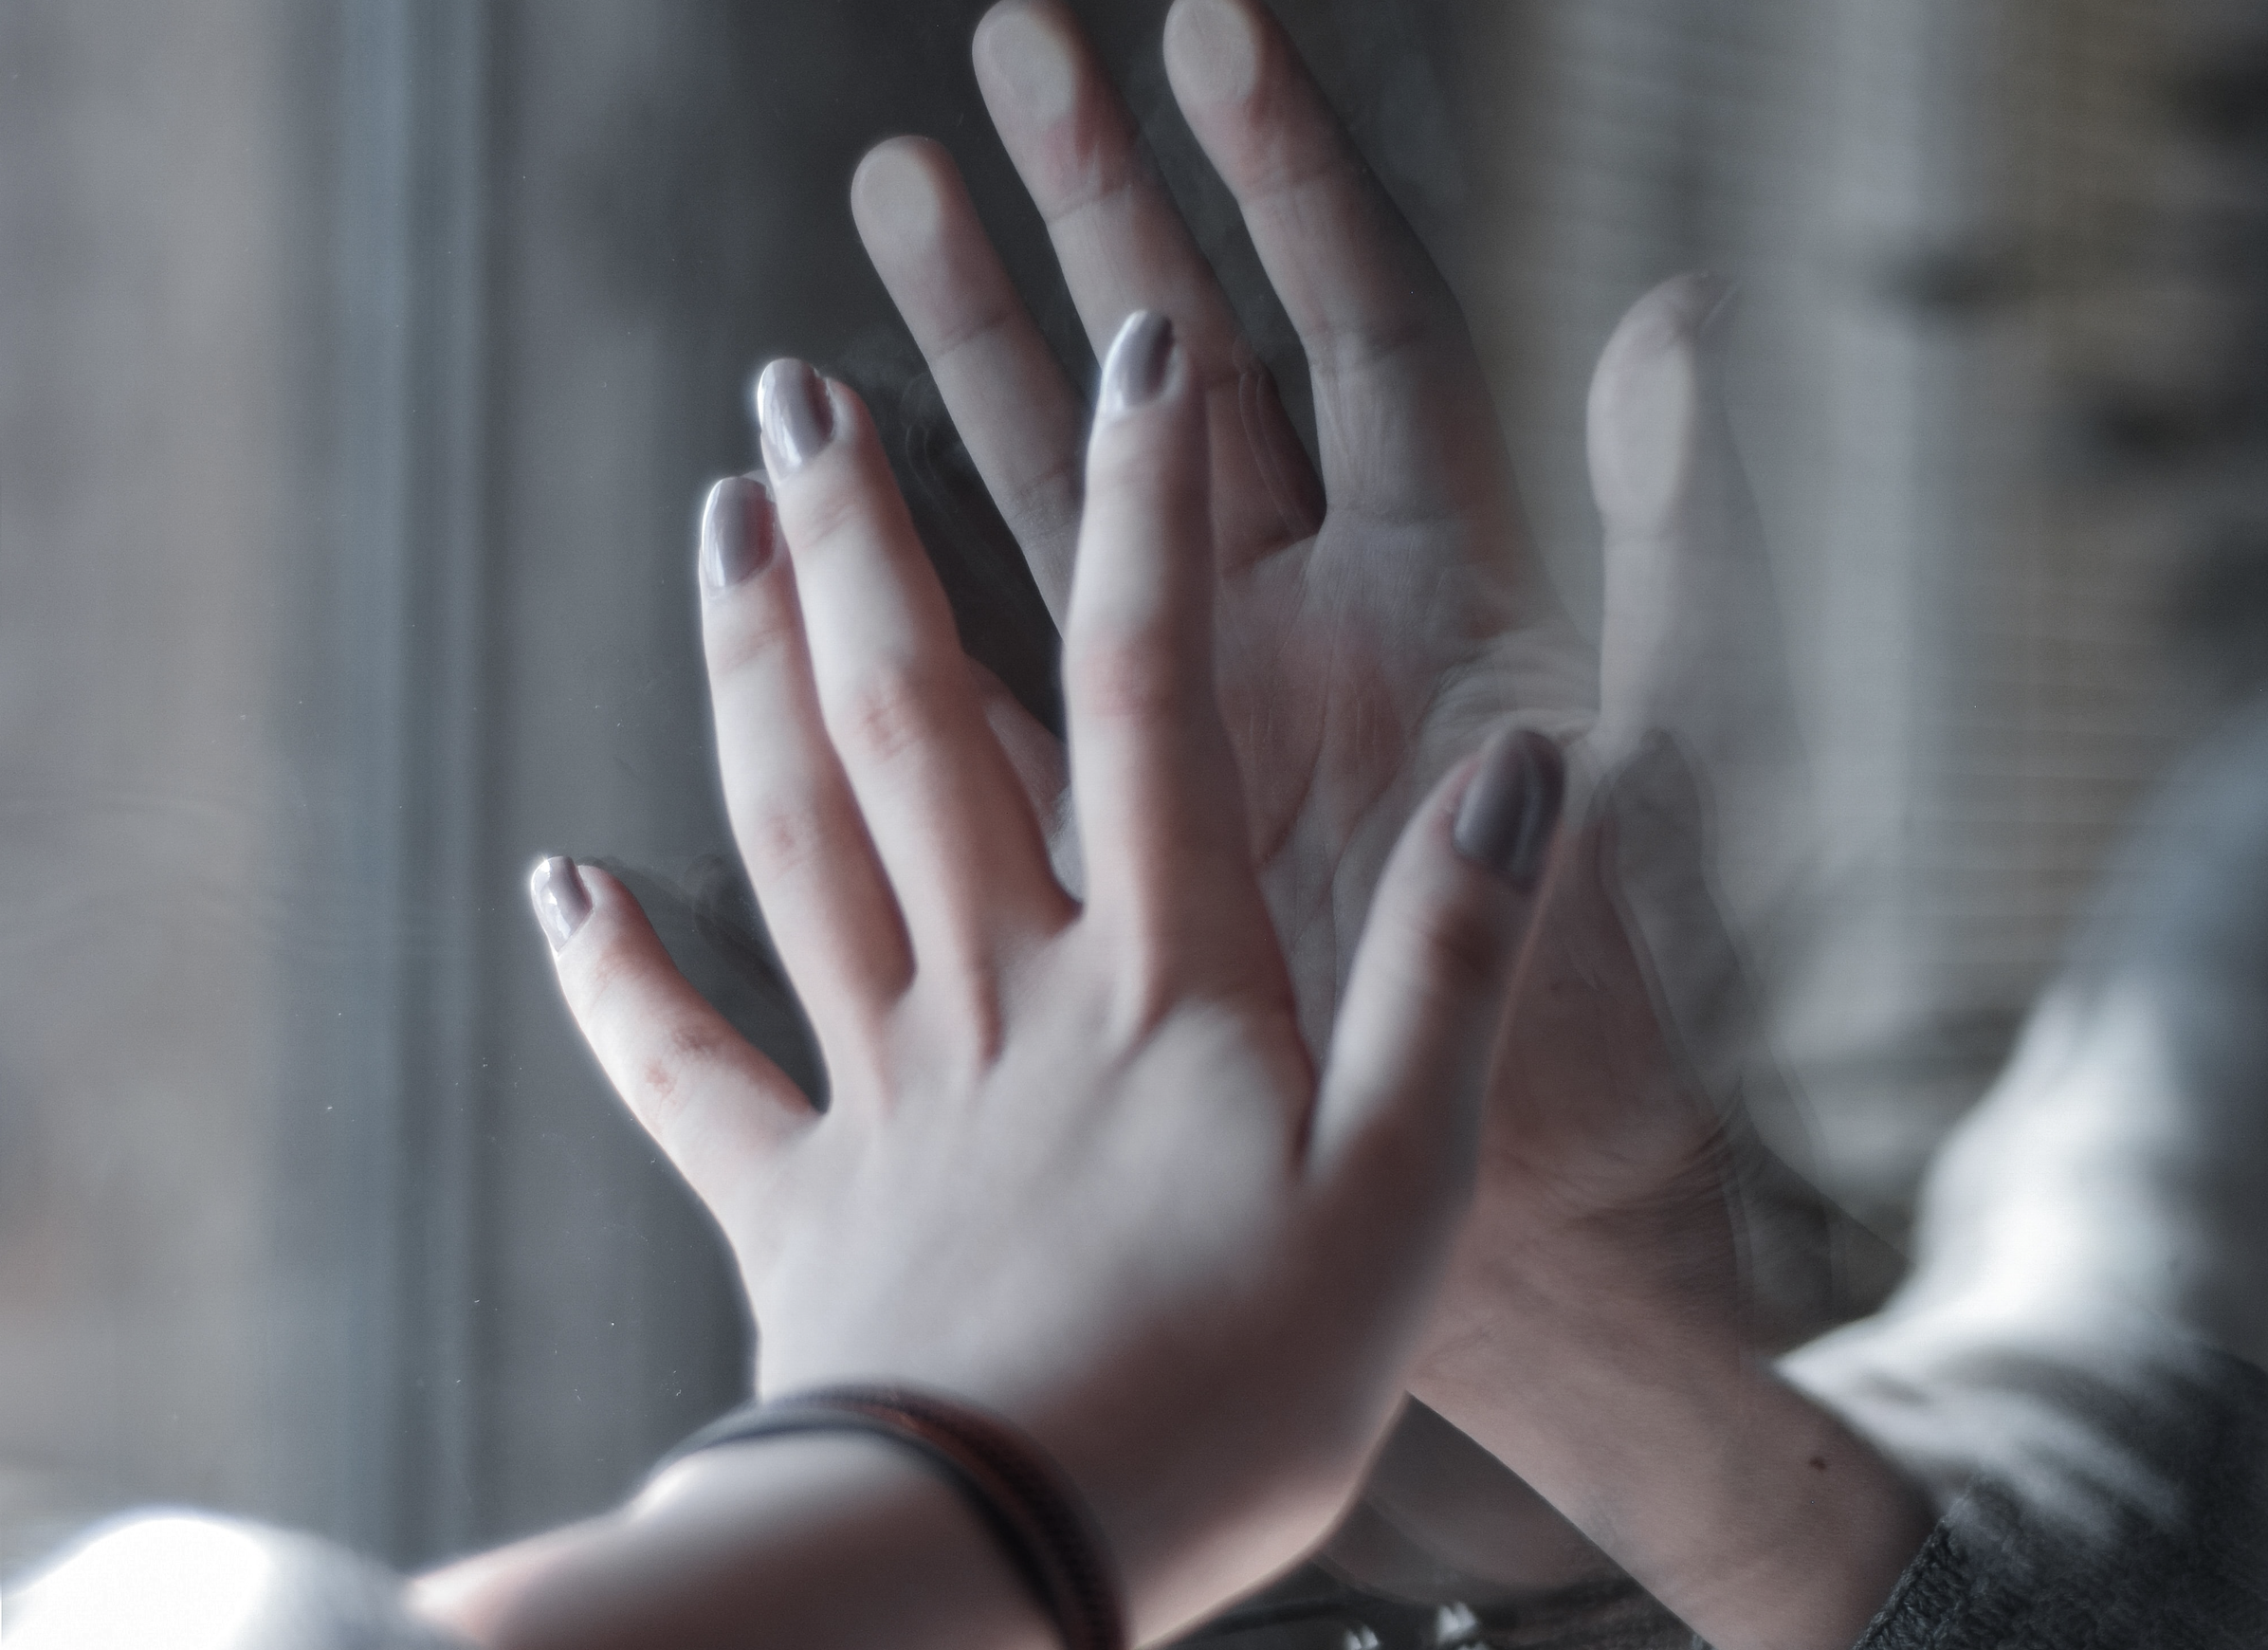 Hands touching through glass